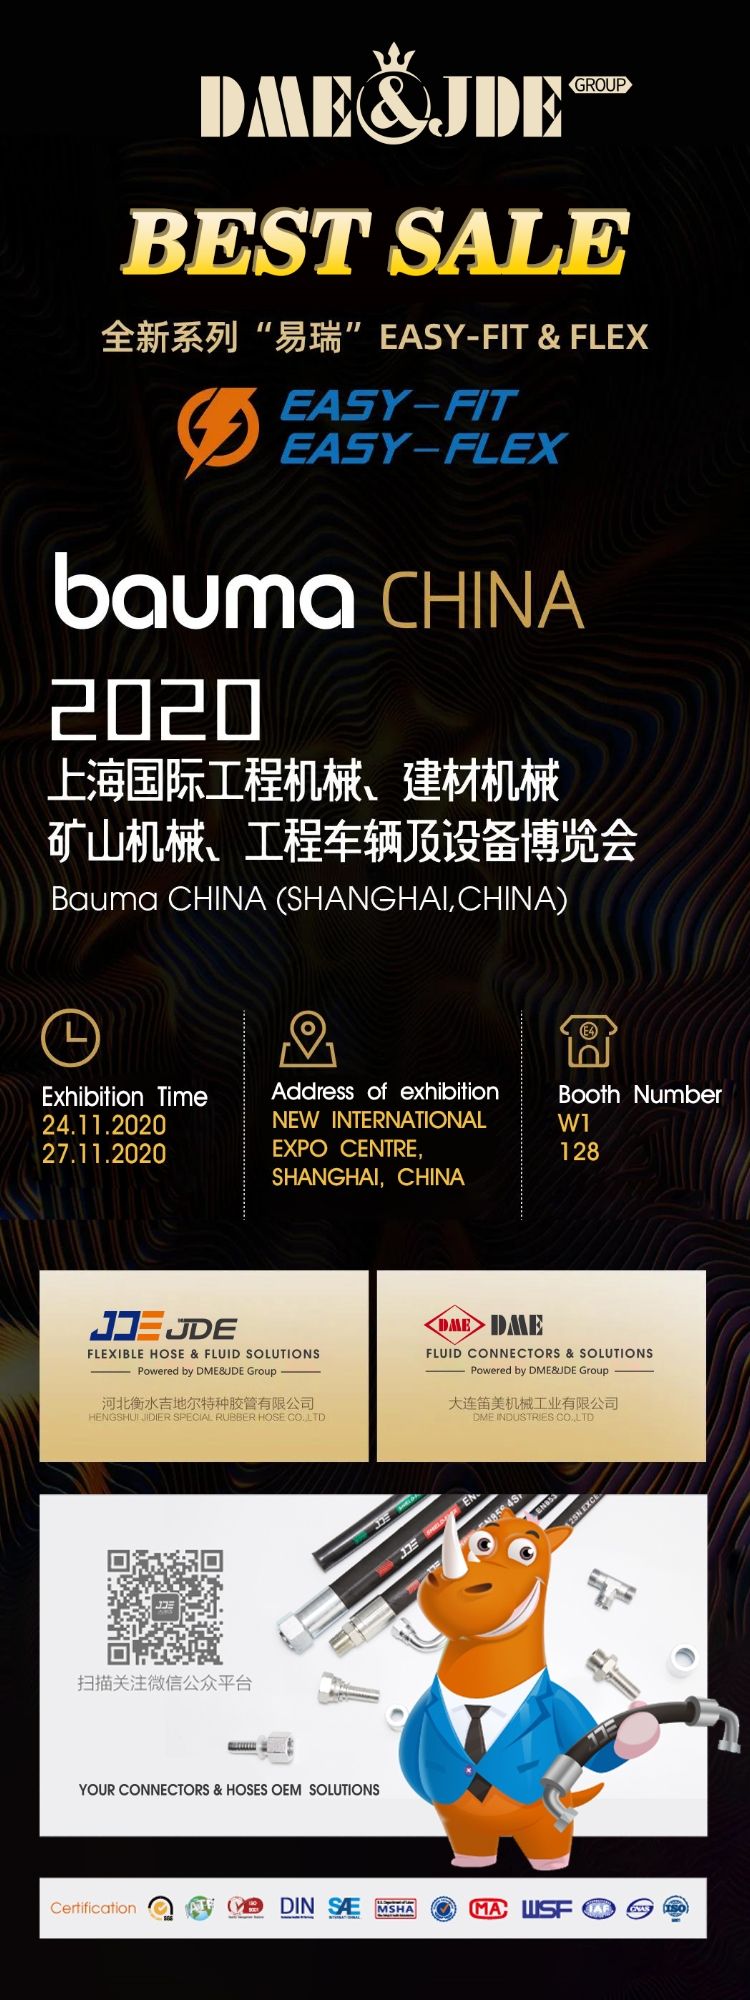 The DME&JDE invitation of Bauma CHINA exhibition.